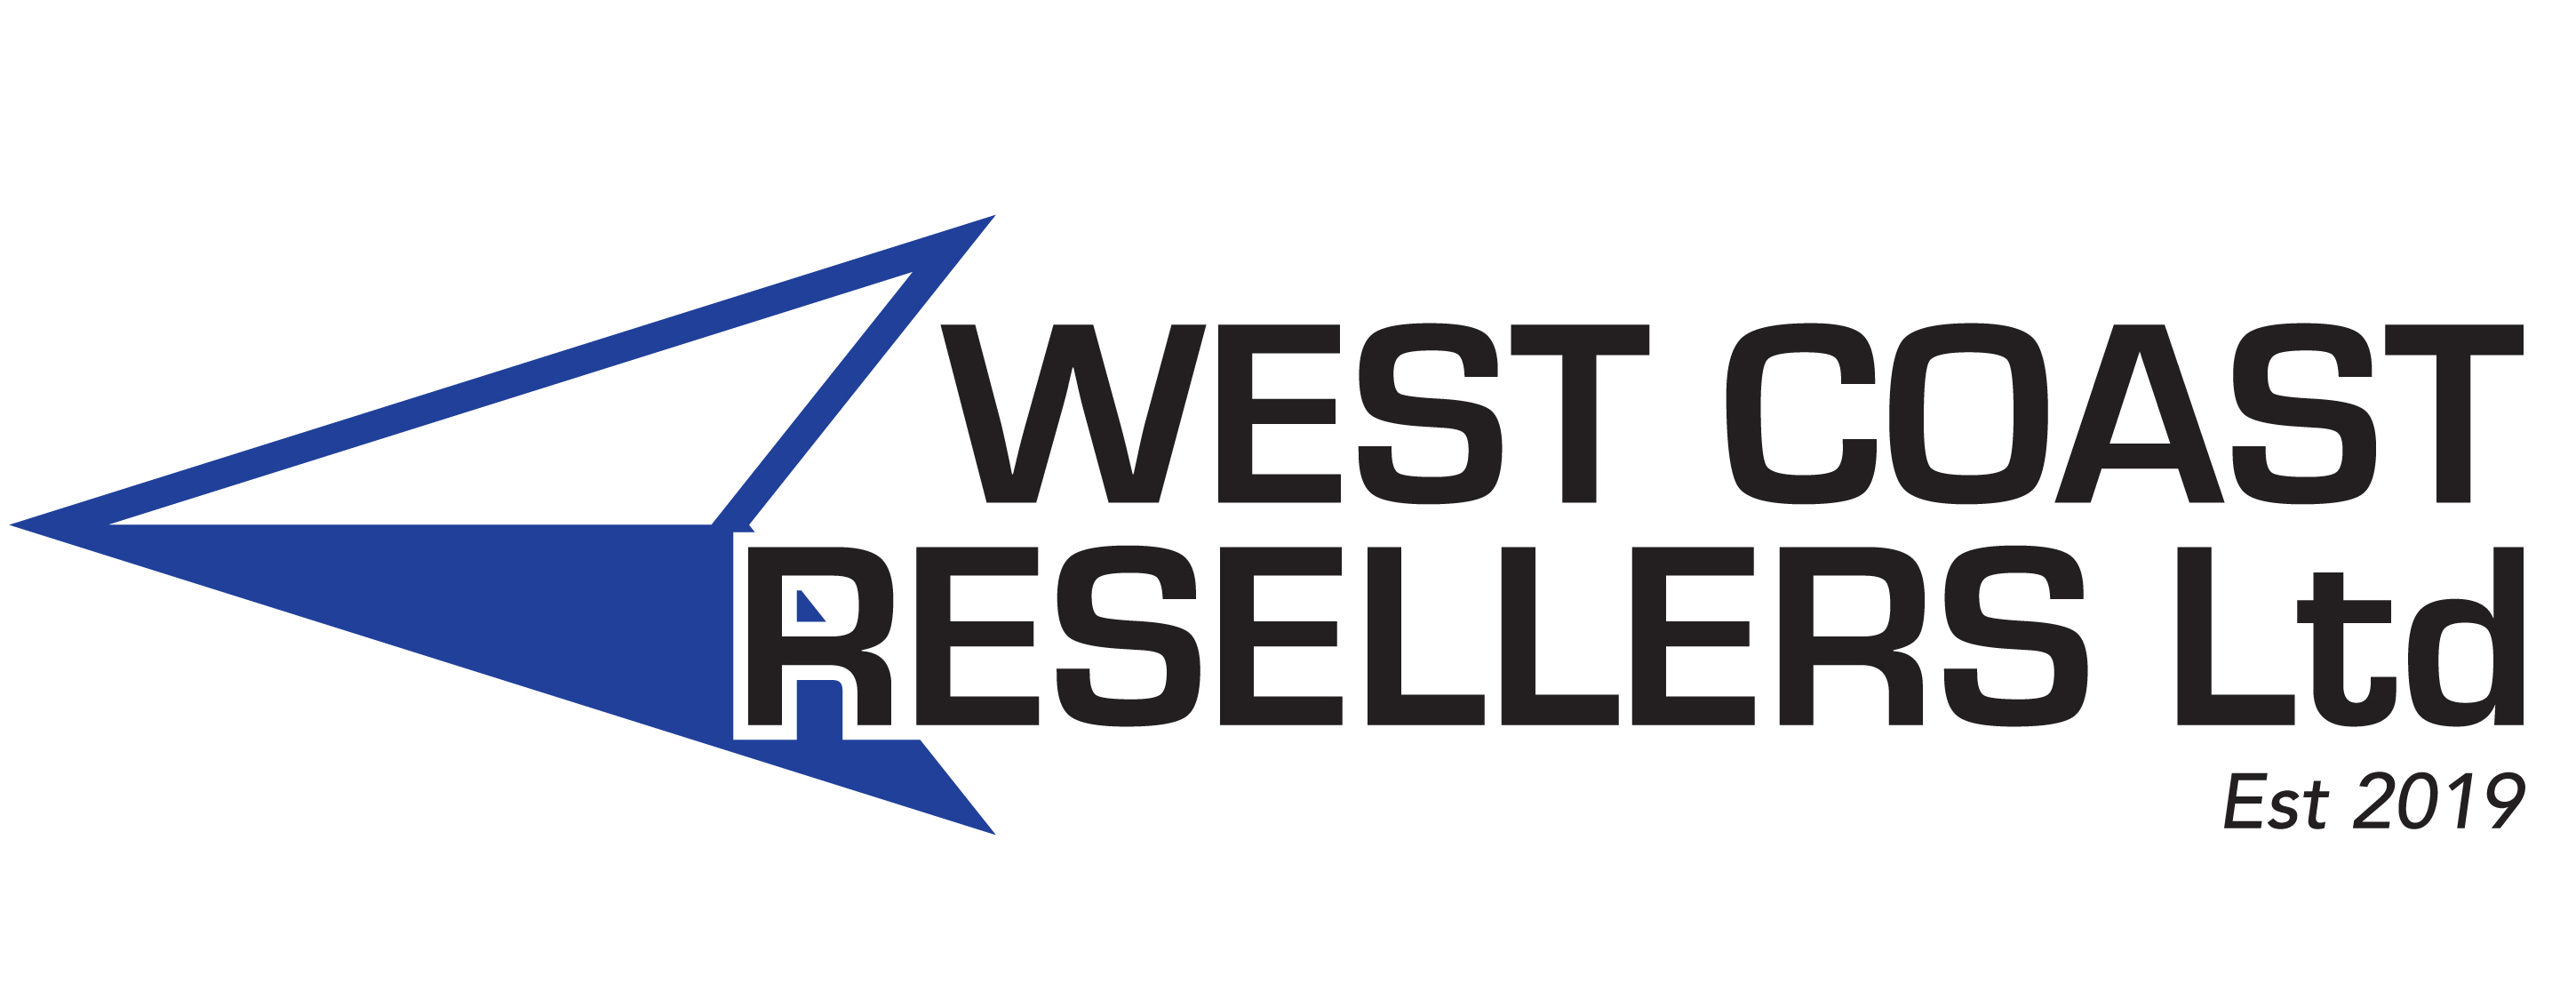 West Coast Resellers Ltd